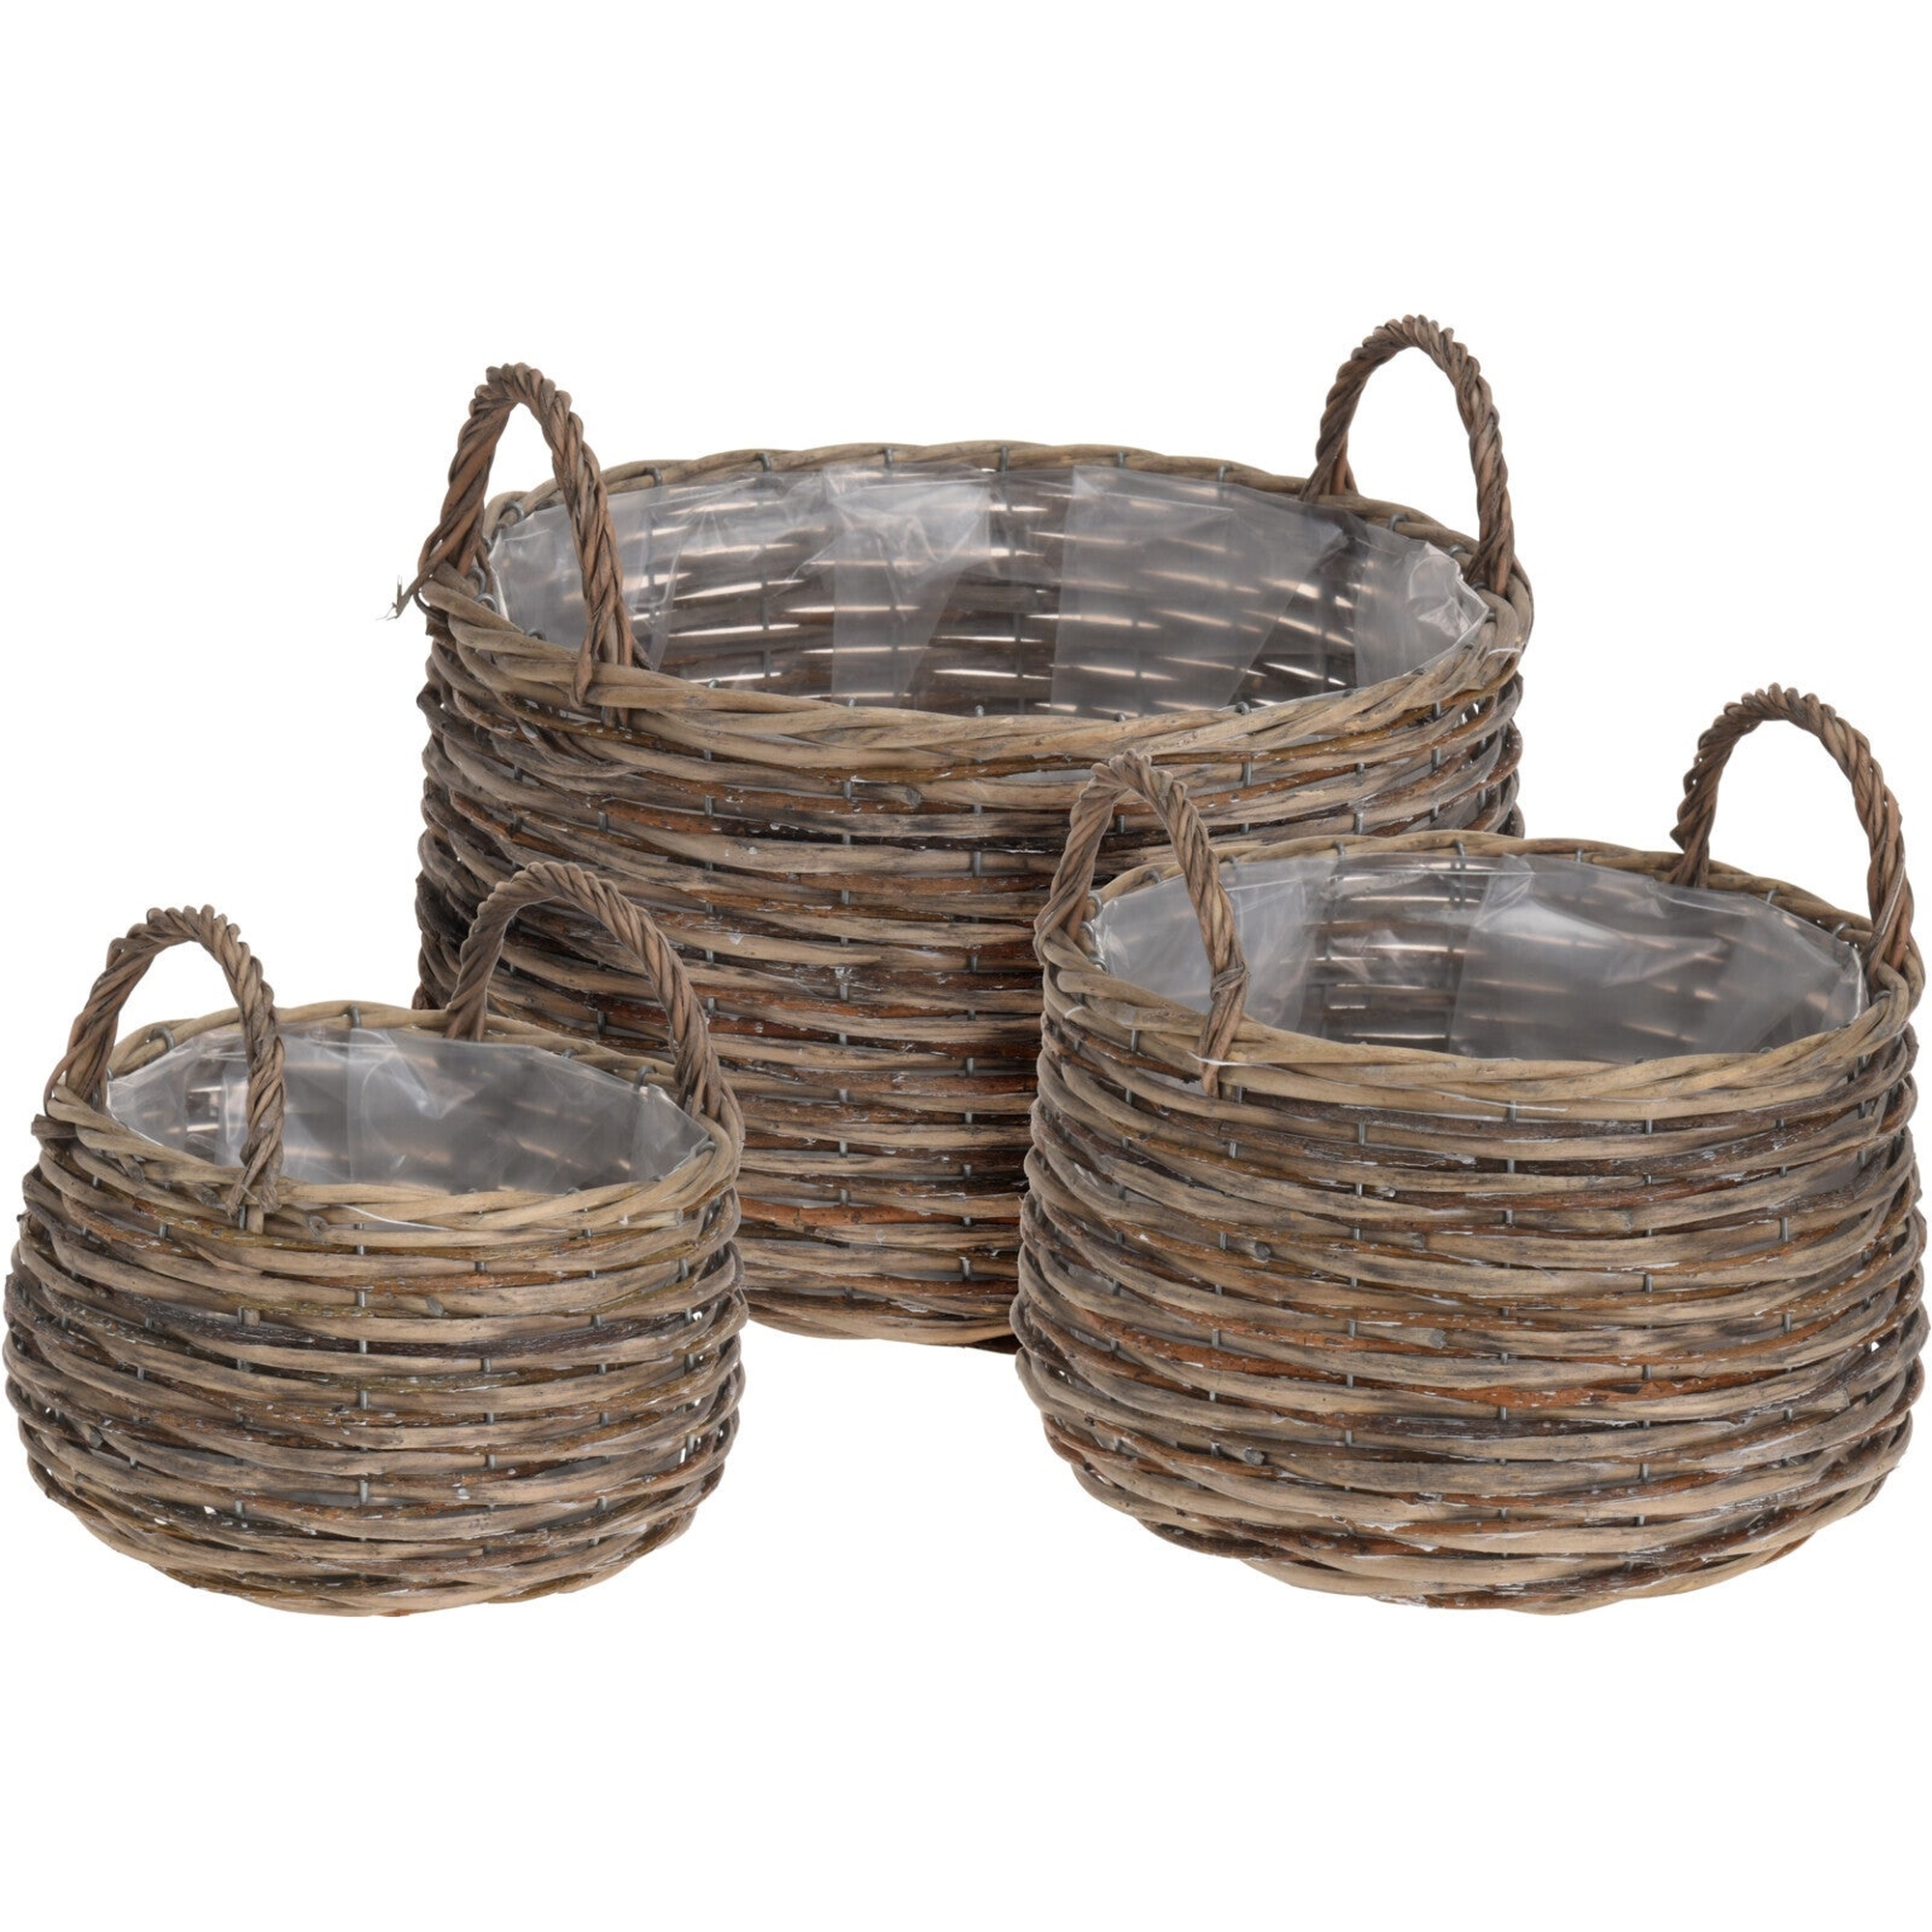 3PCS Natural Wicker Wire Storage Bins Baskets Organizing Farmhouse Shelves Decor